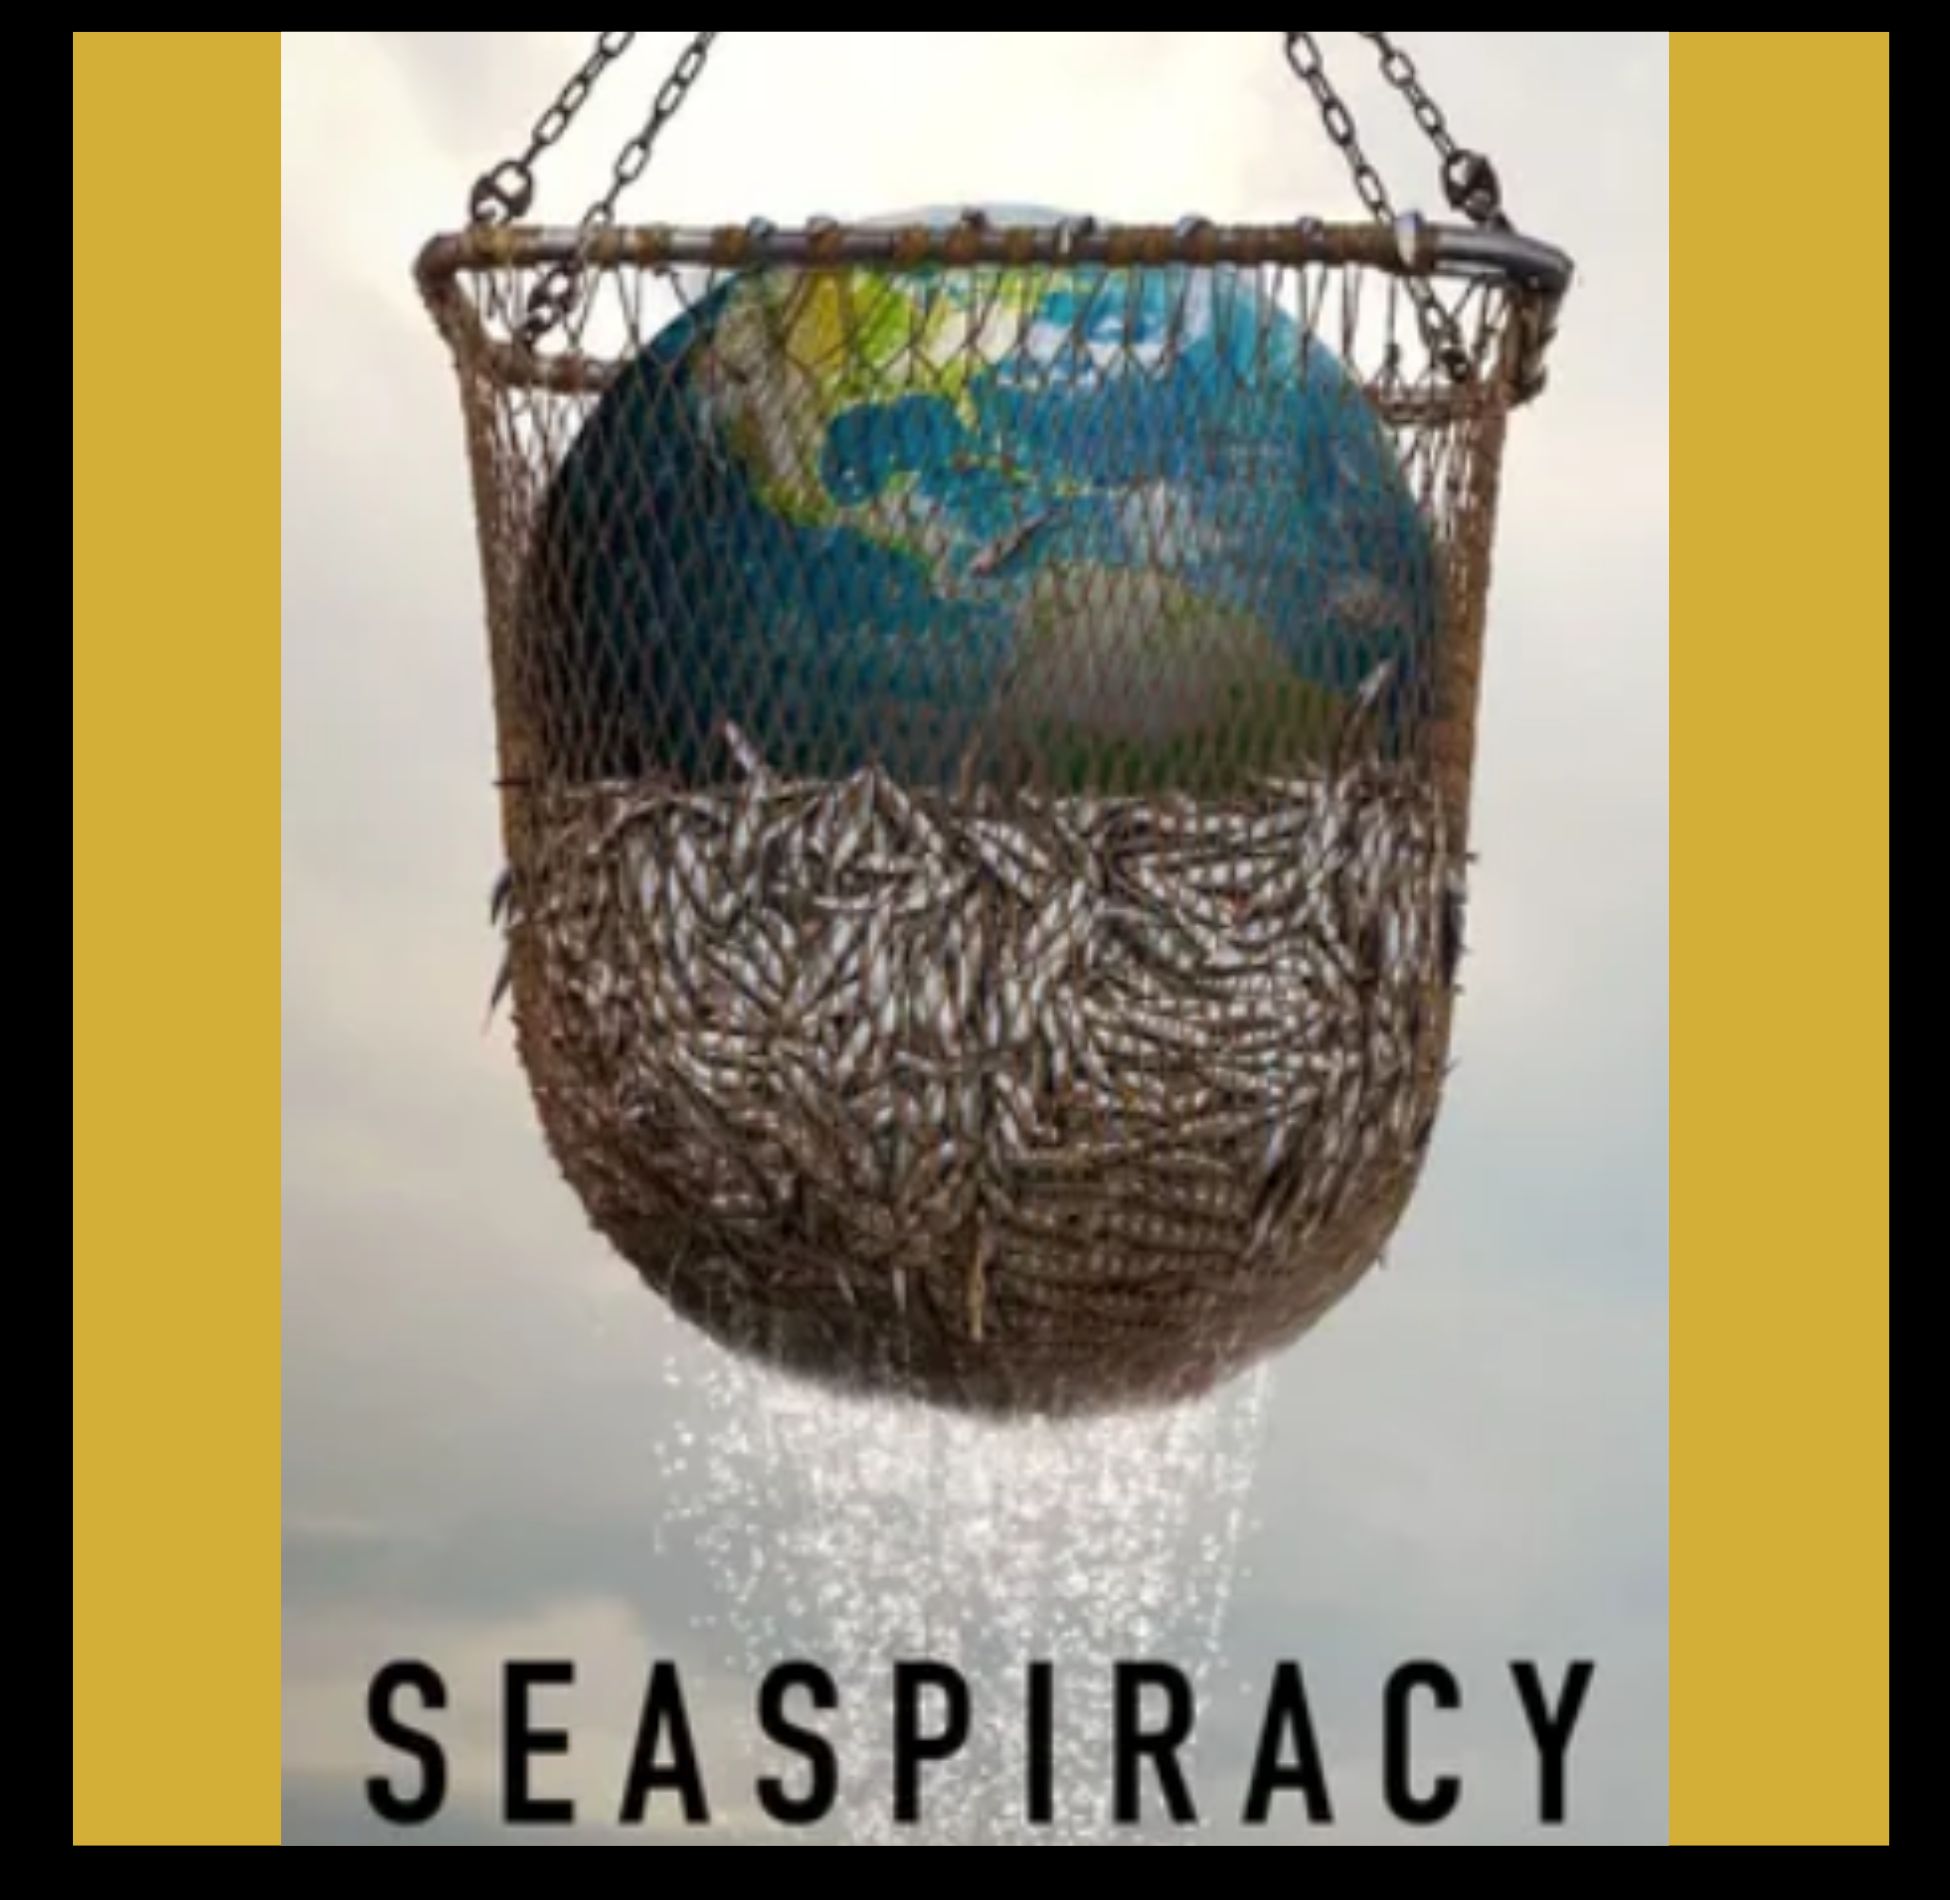 where to watch seaspiracy